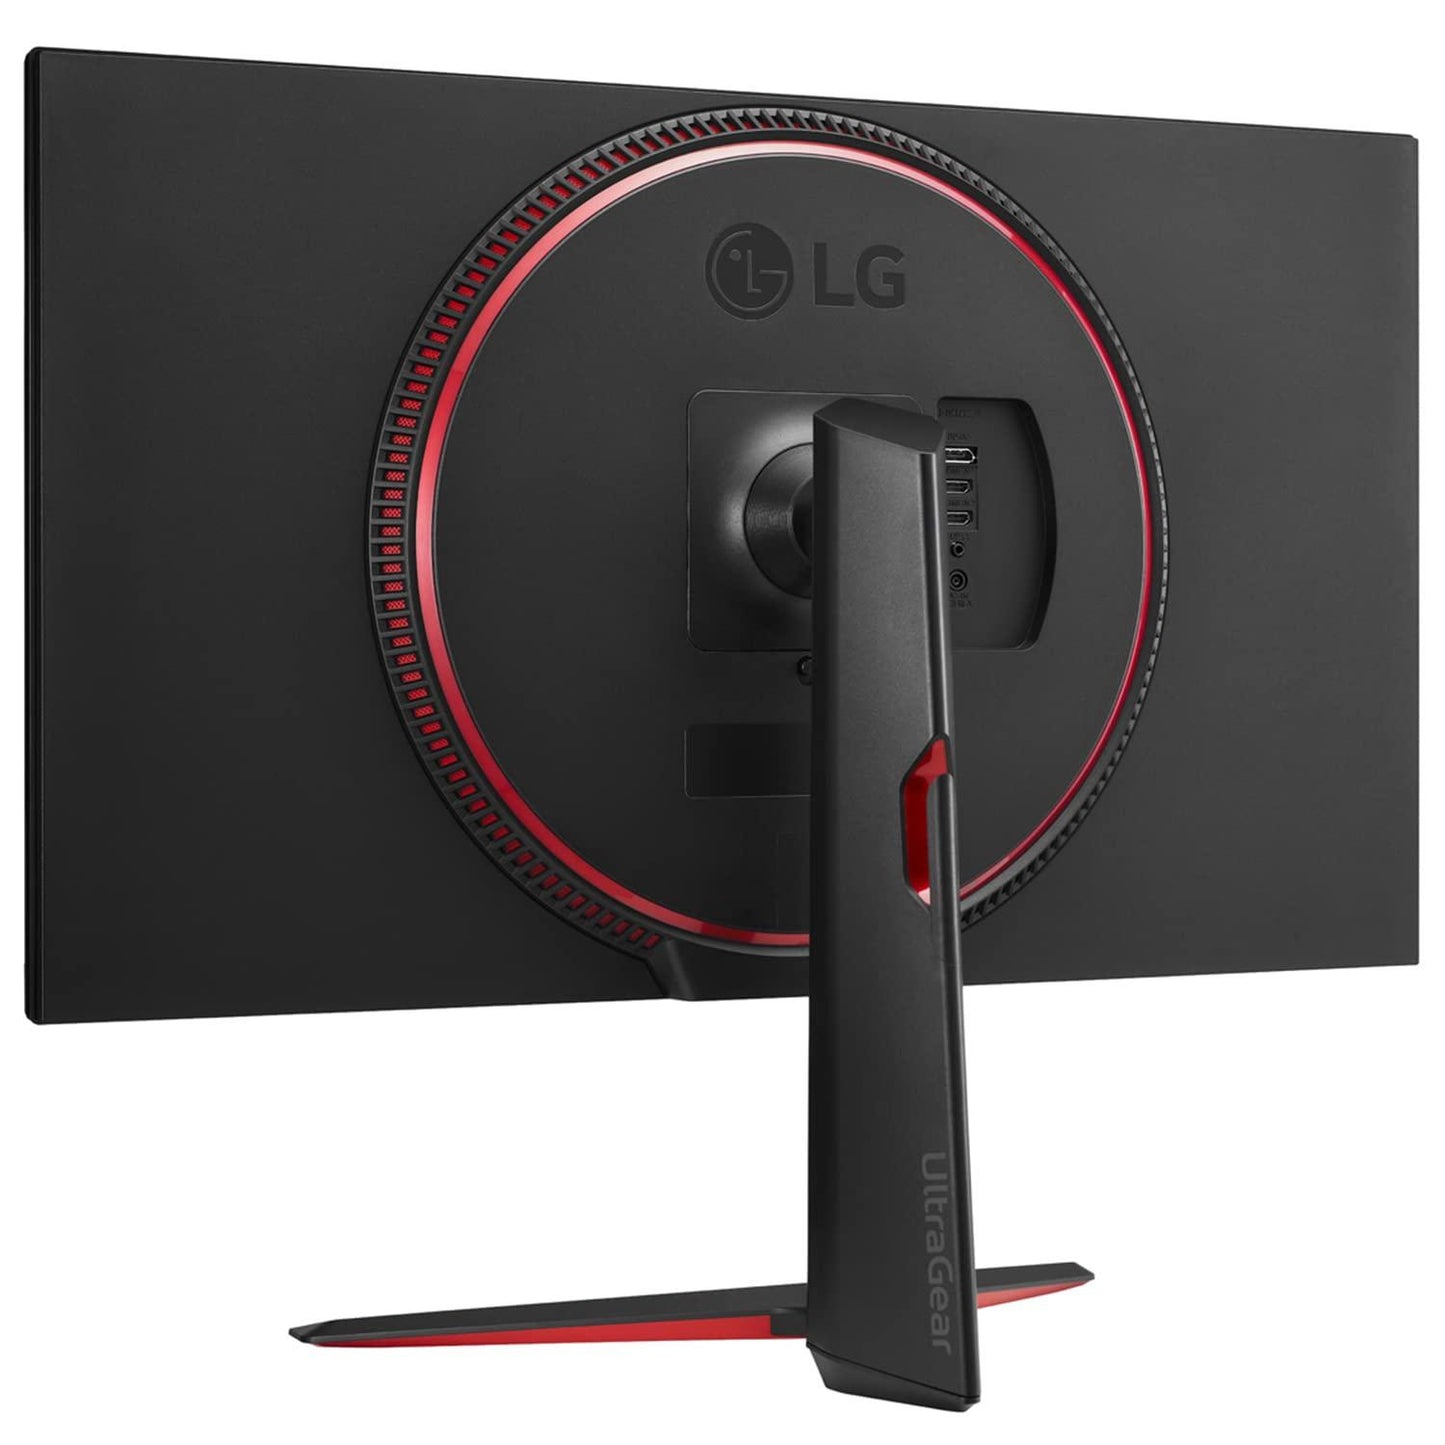 LG Ultragear - 32Gn650 Qhd 32 Inch(80 Cm) 2560 X 1440 Pixels, 165 Hz 1Ms, Va Panel Gaming LCD Monitor, Black